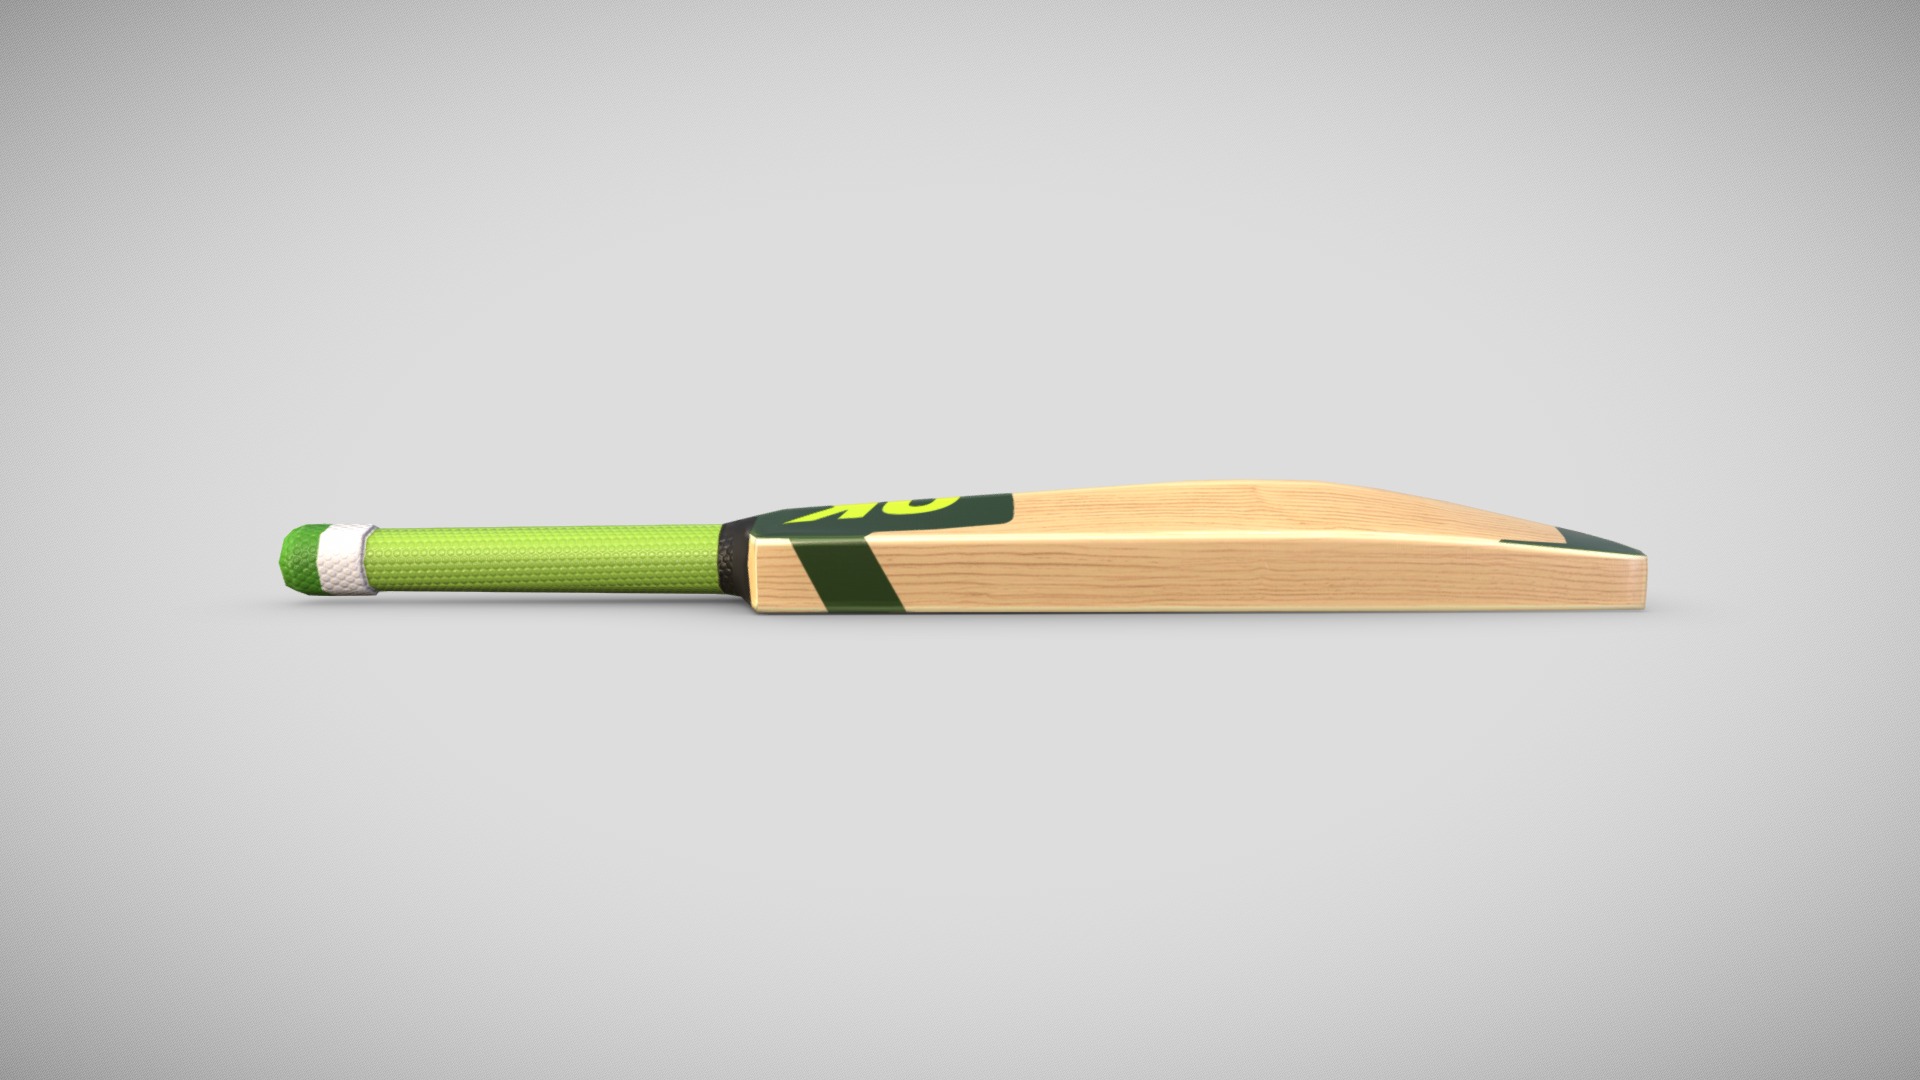 3D model cricket bat - This is a 3D model of the cricket bat. The 3D model is about a pencil with a green tip.